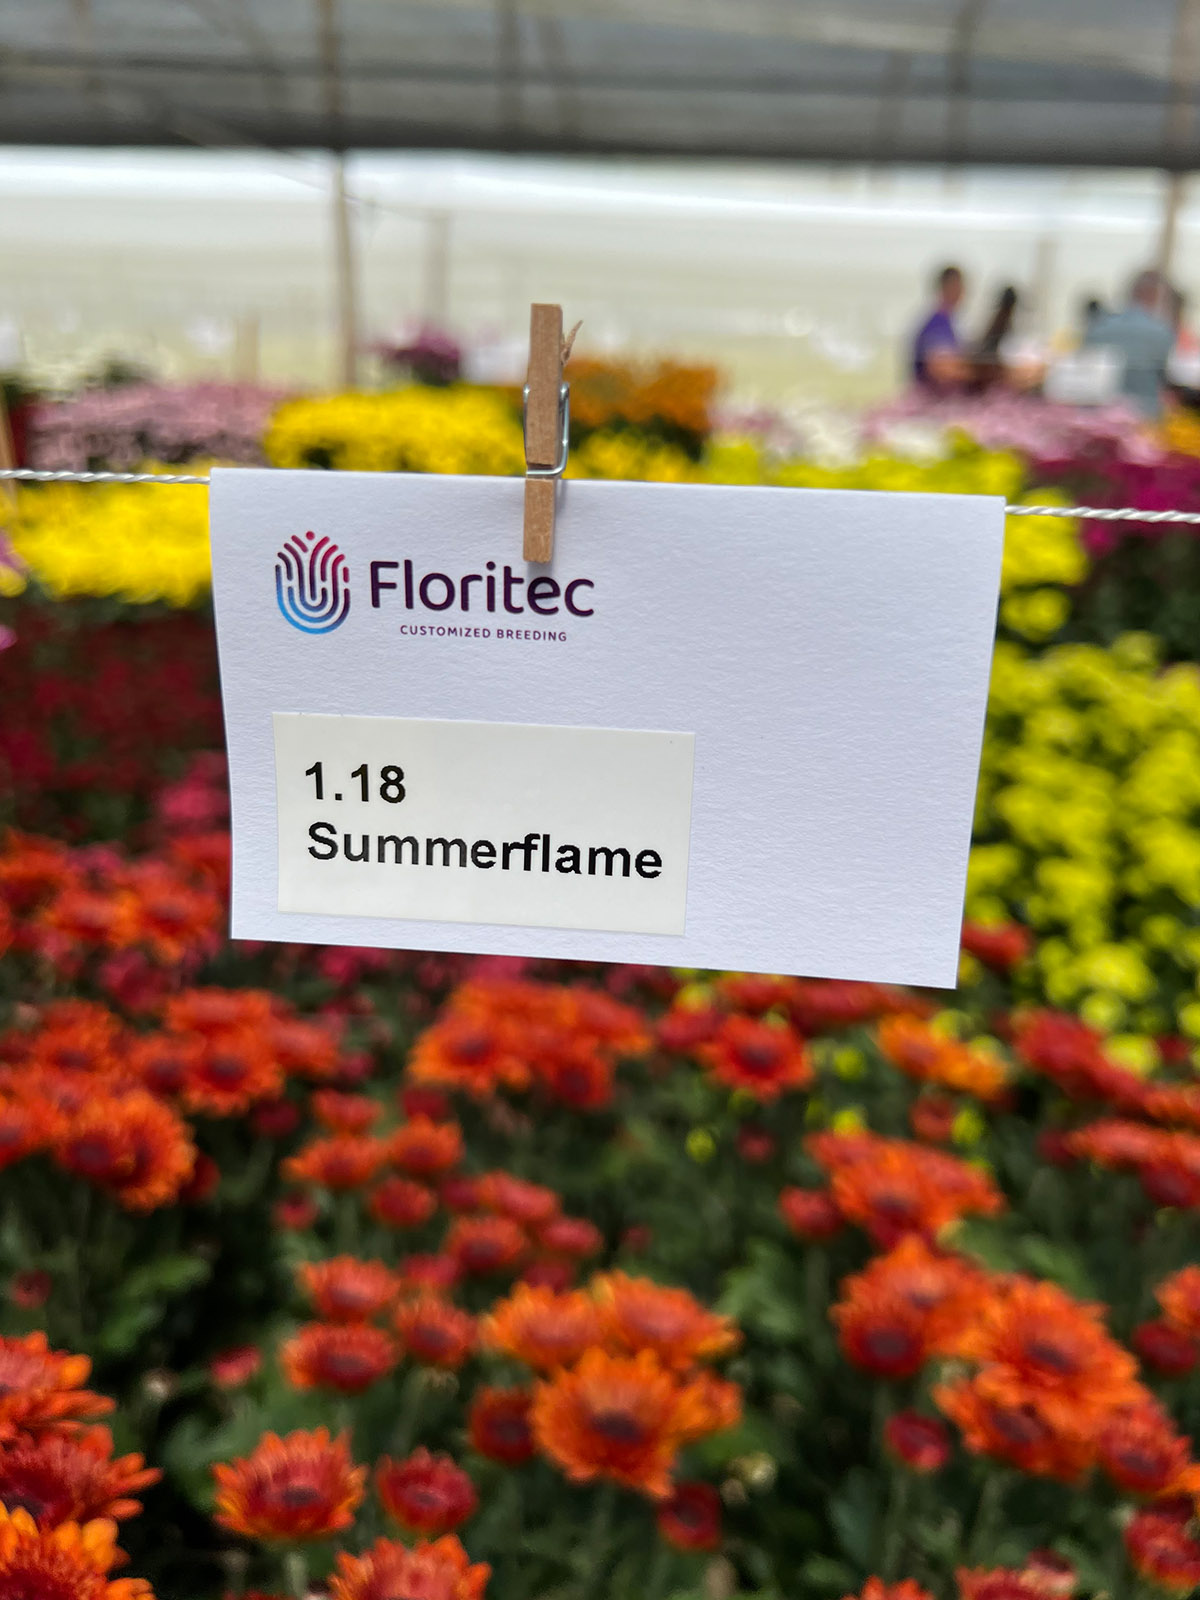 Floritec Colombia Trials Chrysanthemum Summerflame on Thursd